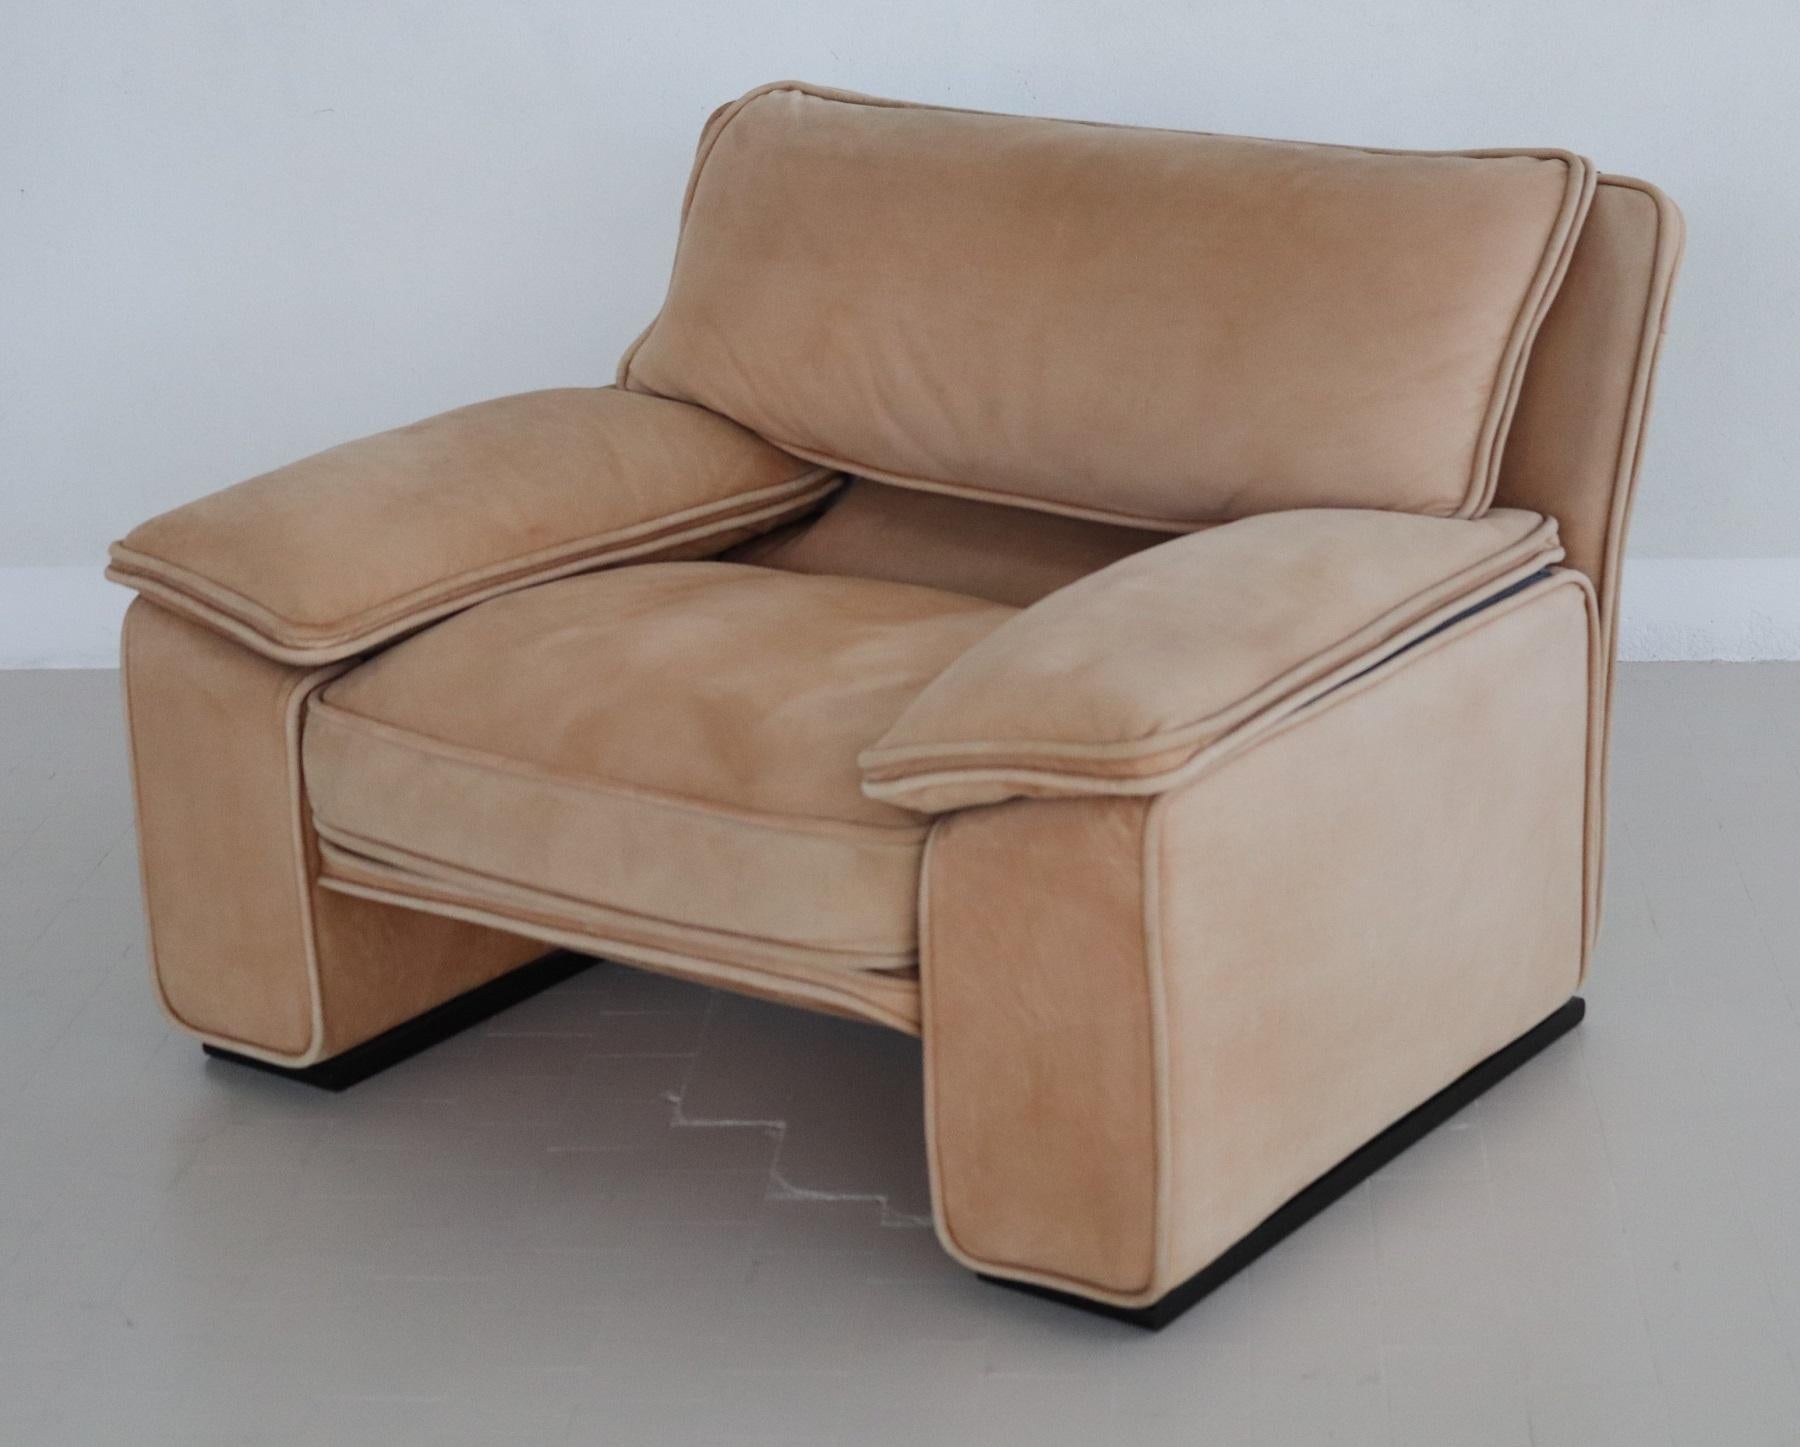 Late 20th Century Italian Midcentury Vintage Nappa Leather Sofa by Ferruccio Brunati, 1970s